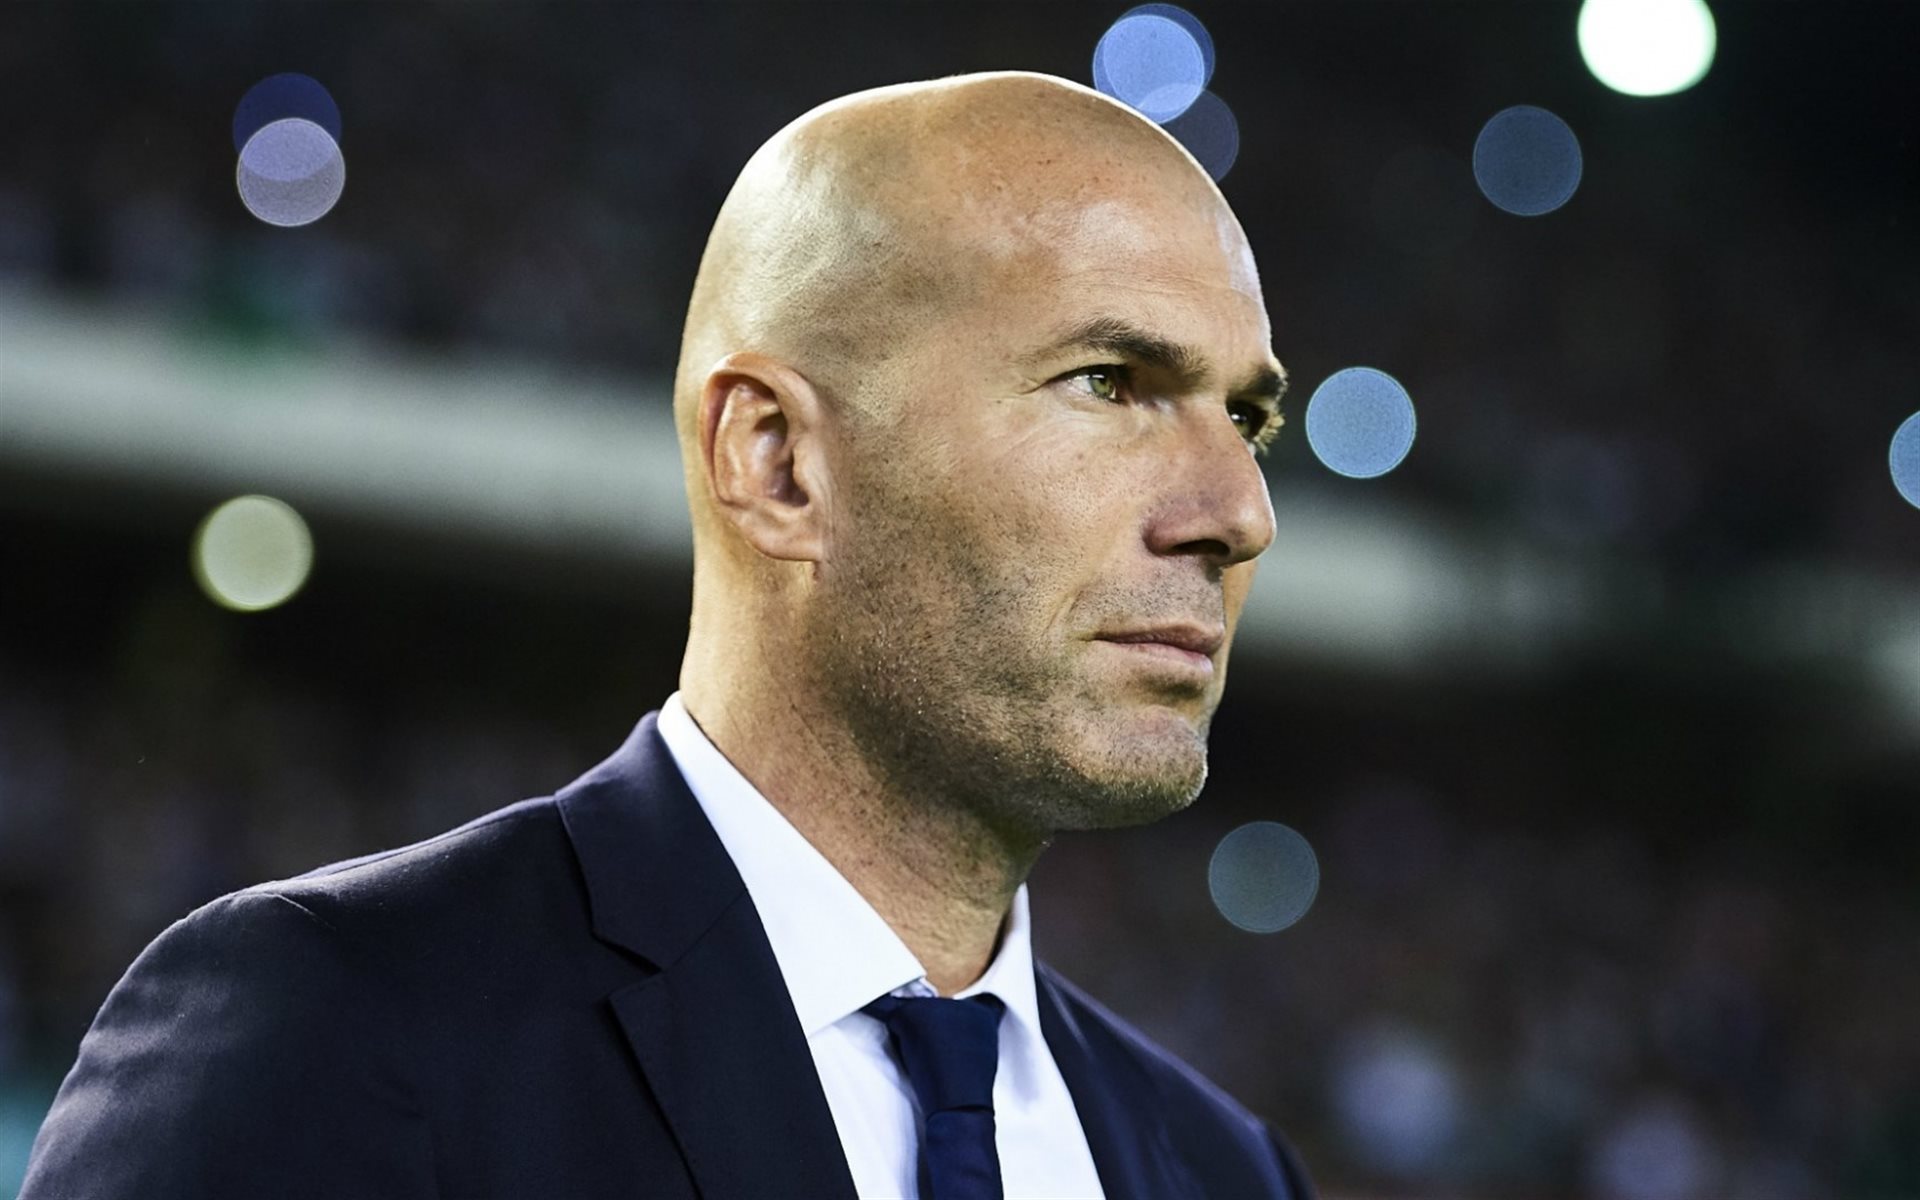 Football, Zinedine Zidane, Real Madrid, Coach, Spain - Zinedine Zidane 2016 - HD Wallpaper 